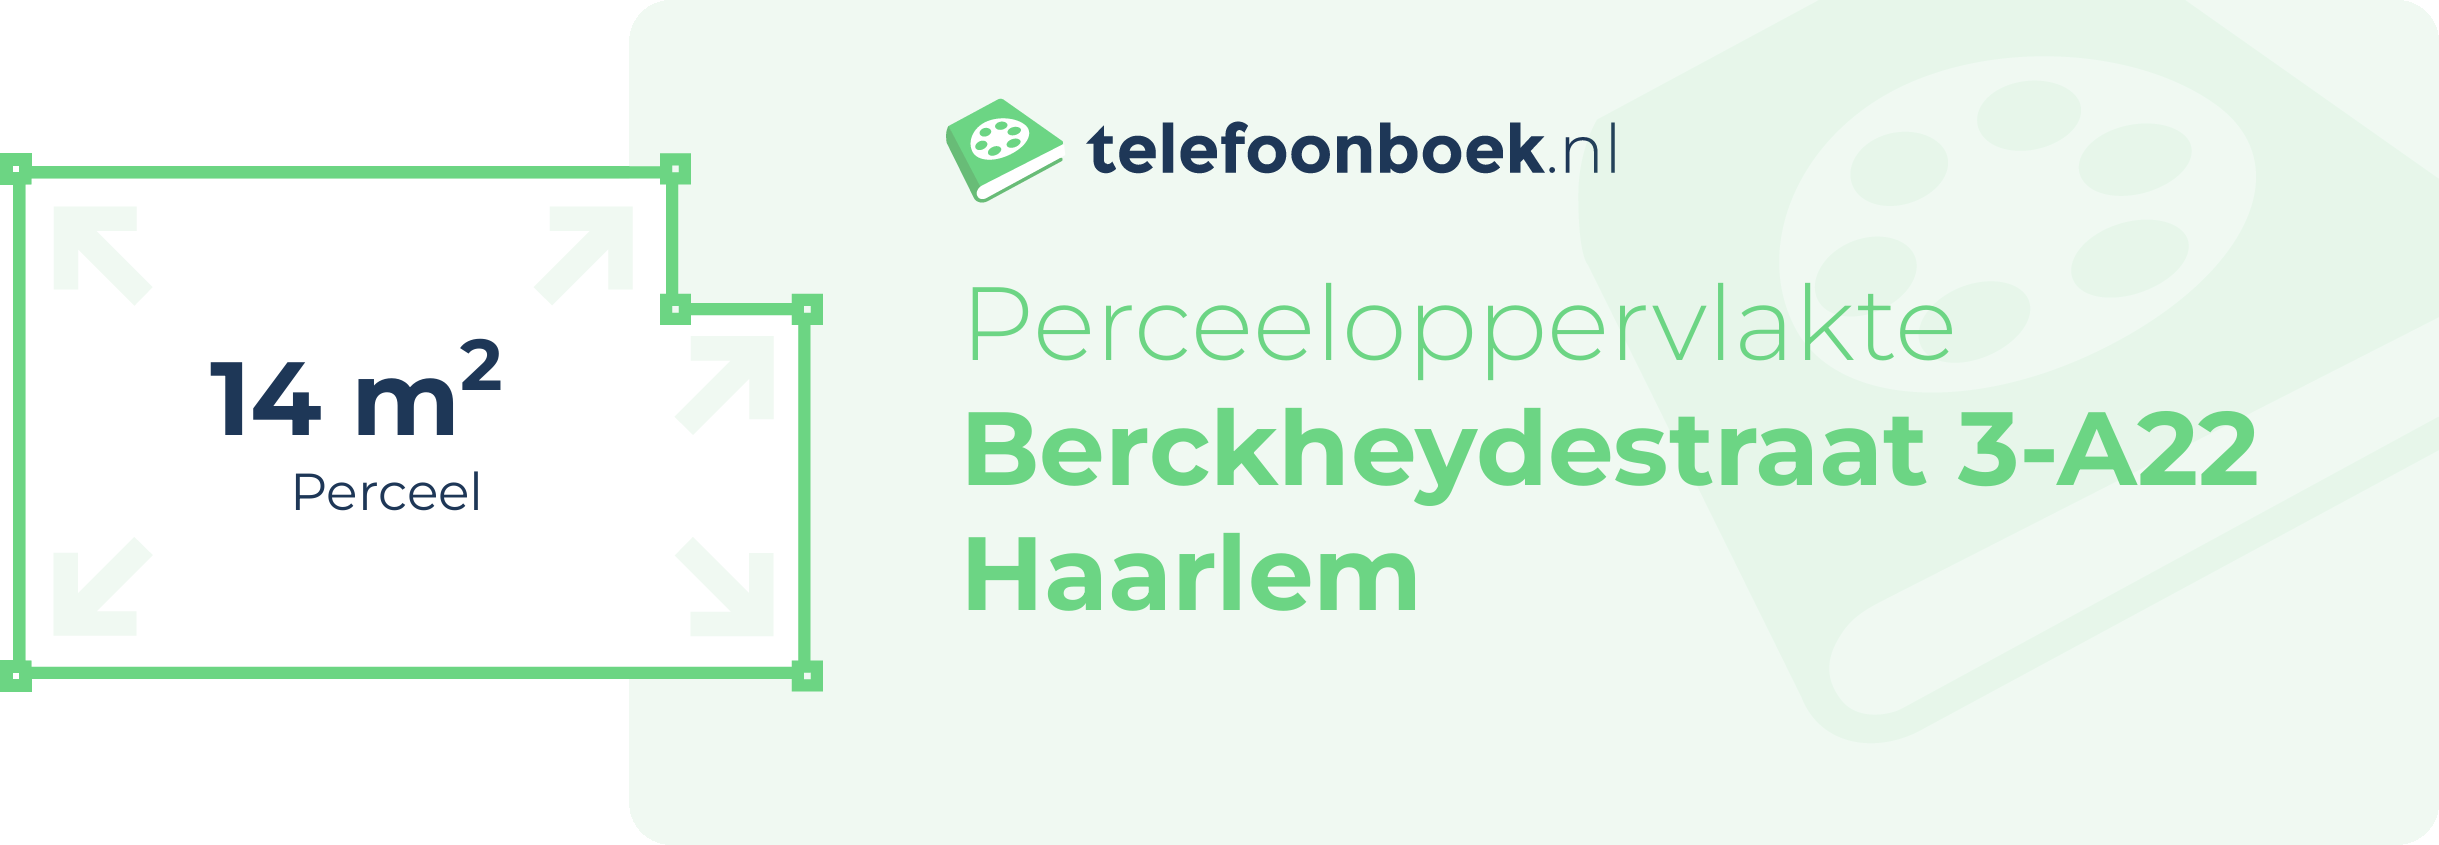 Perceeloppervlakte Berckheydestraat 3-A22 Haarlem